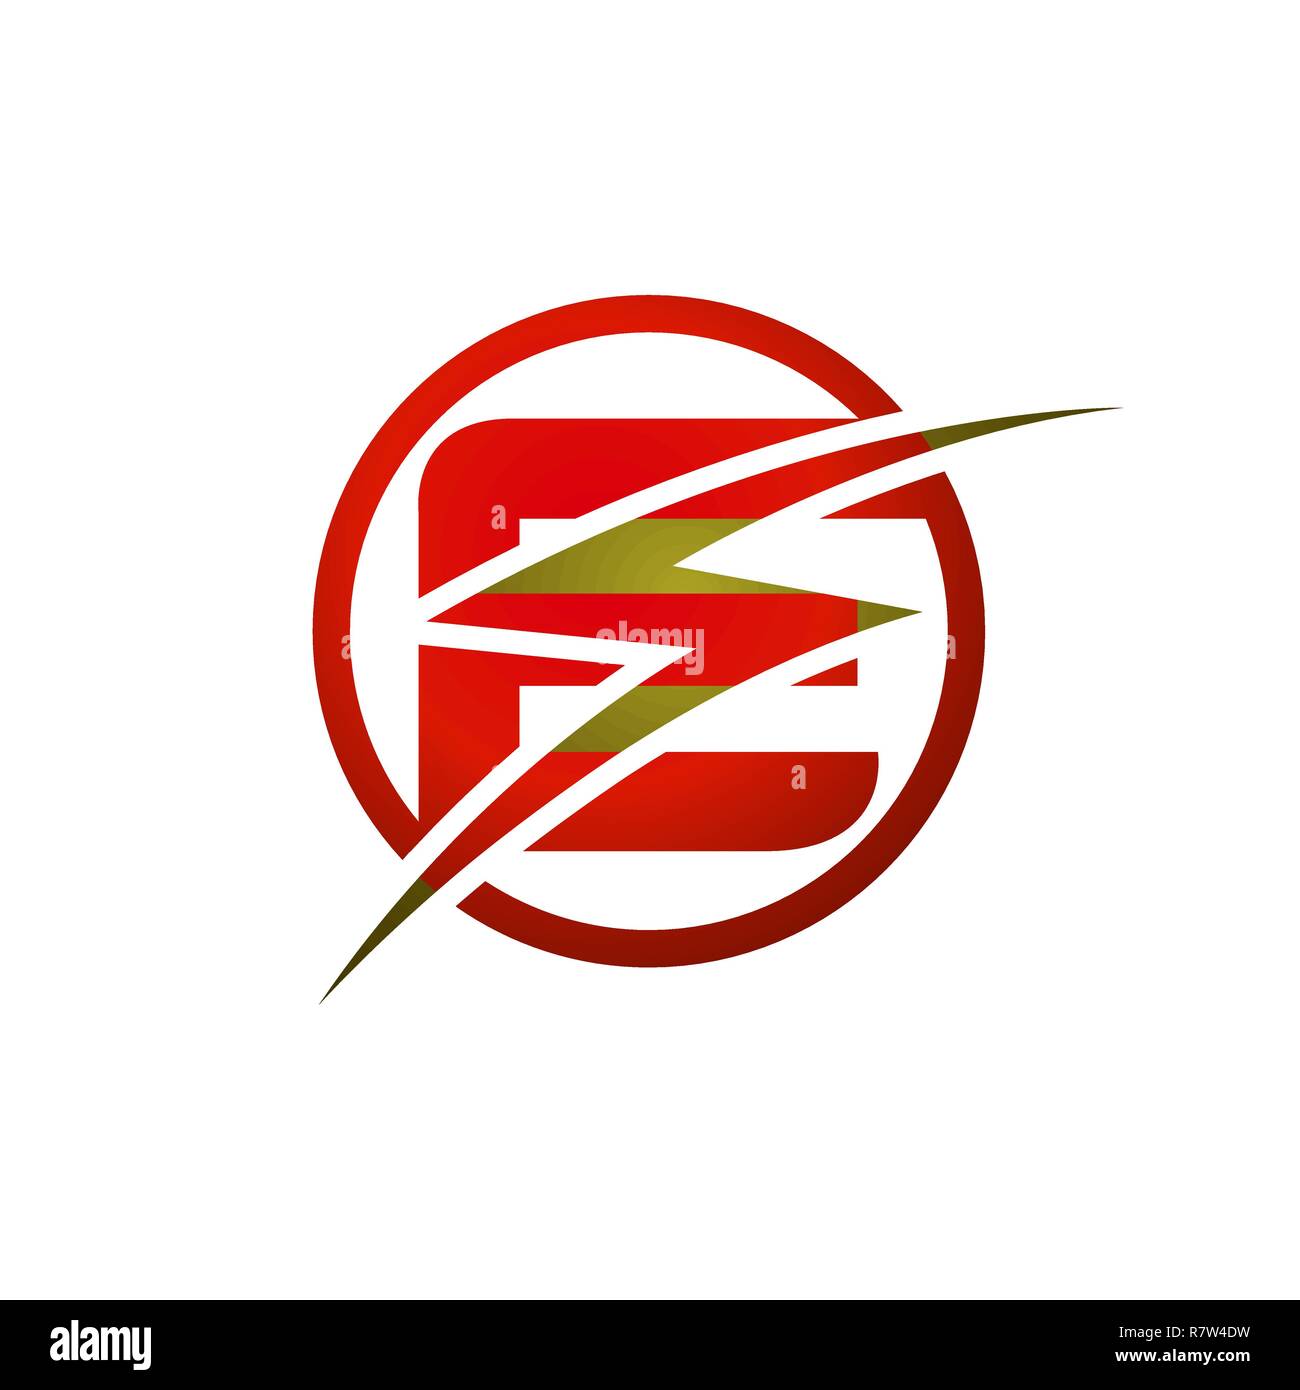 energy sport logo with thunderbolt vector icon symbol design